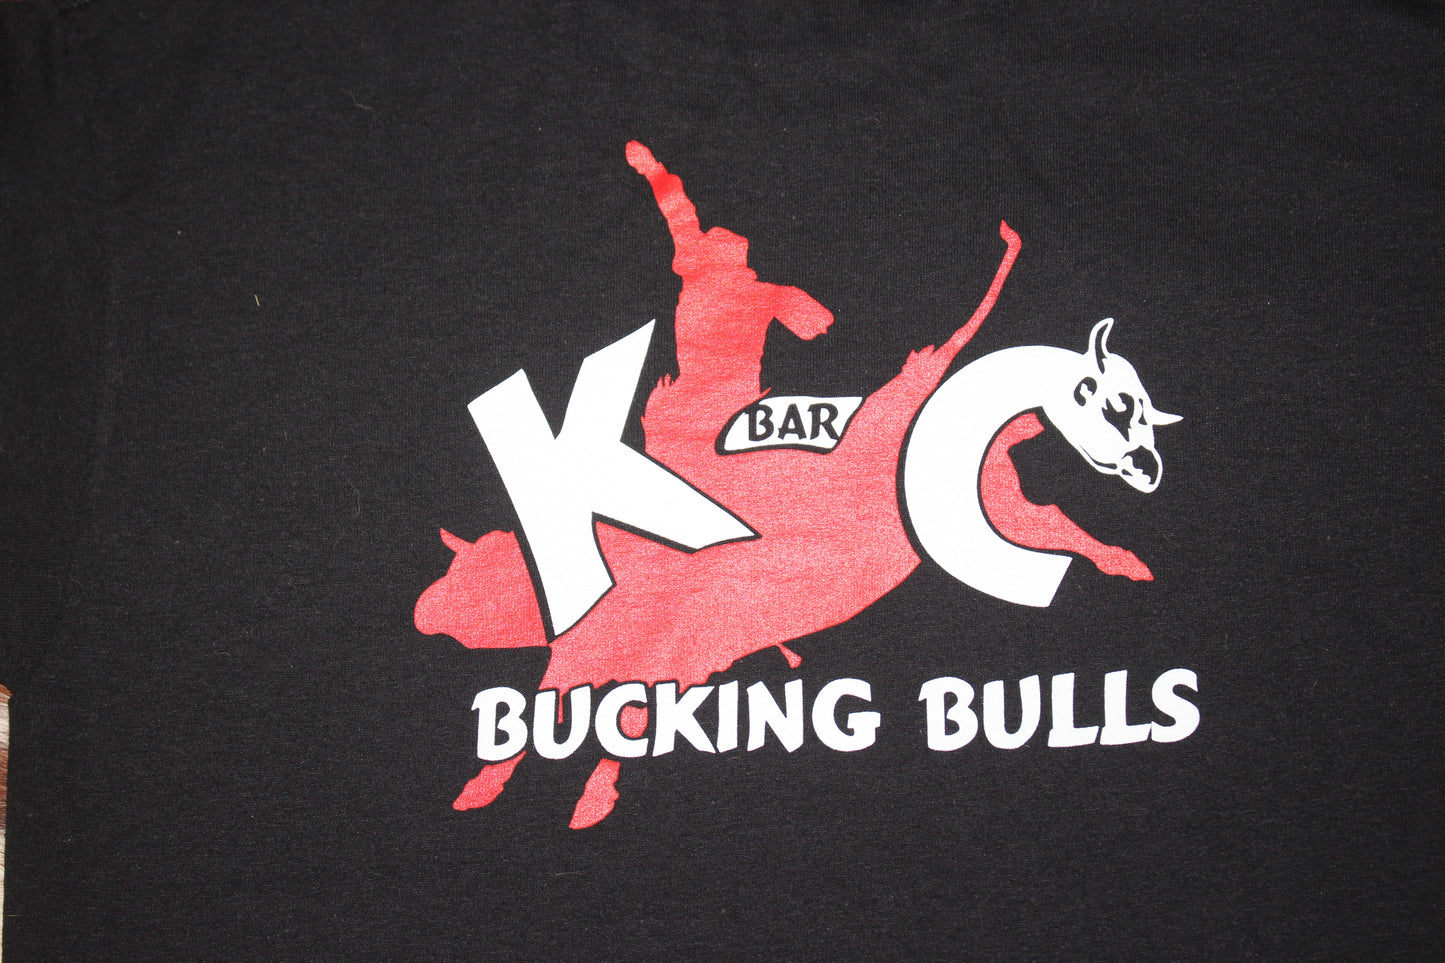 K-C Sports Black  T-Shirt